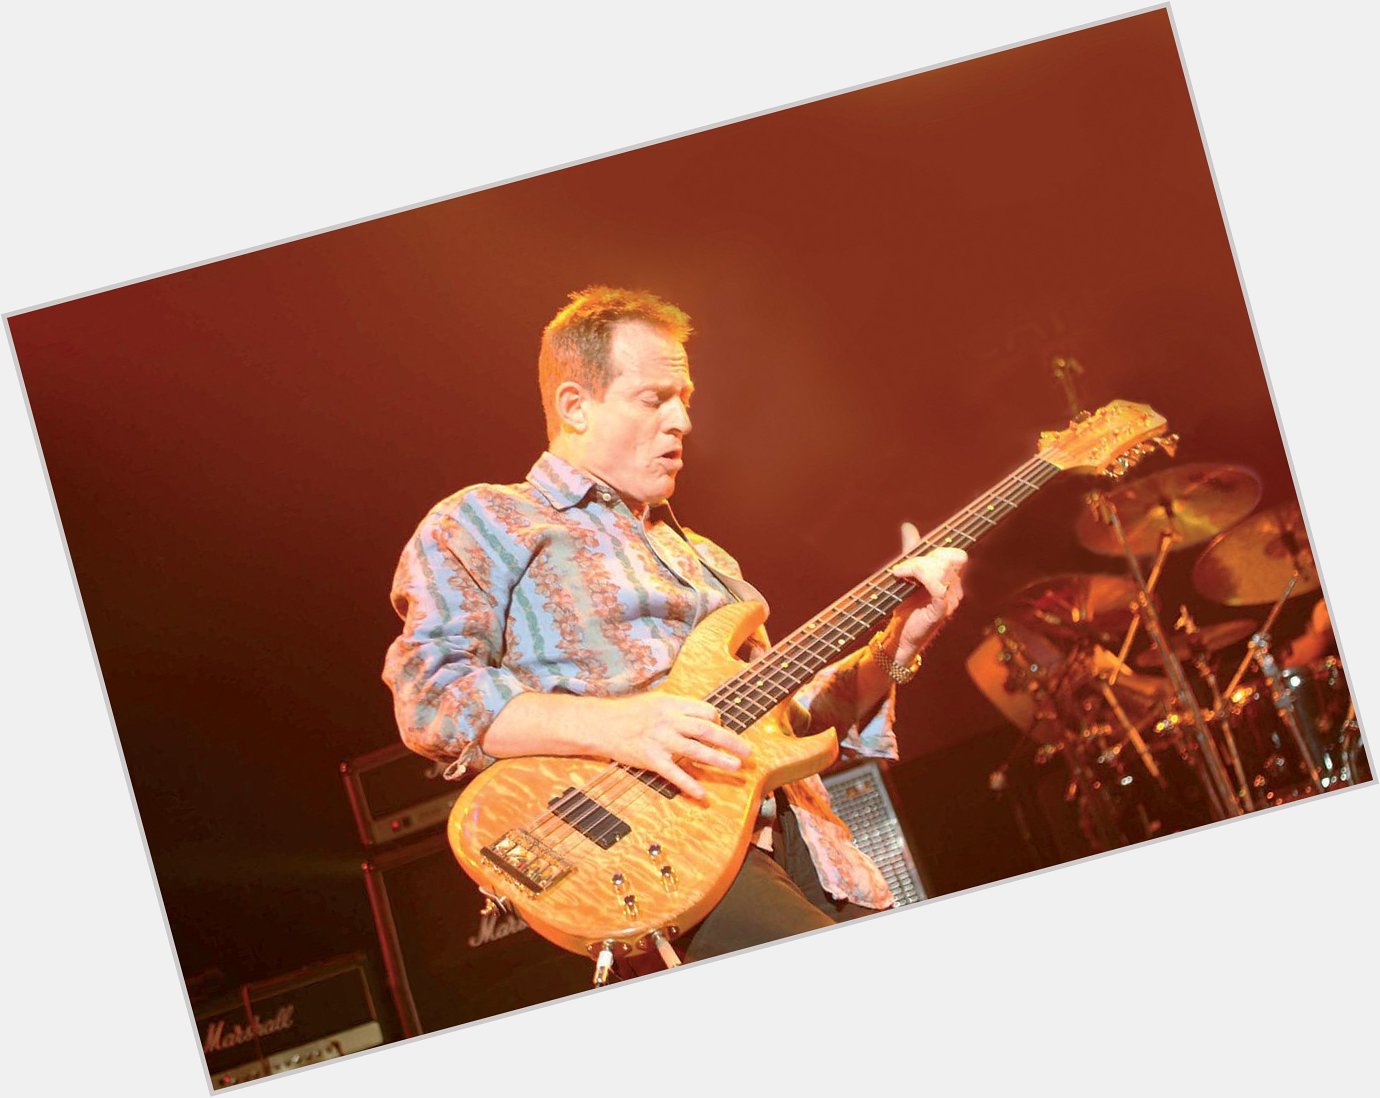 Happy birthday to bassist and multi-instrumentalist, John Paul Jones! 